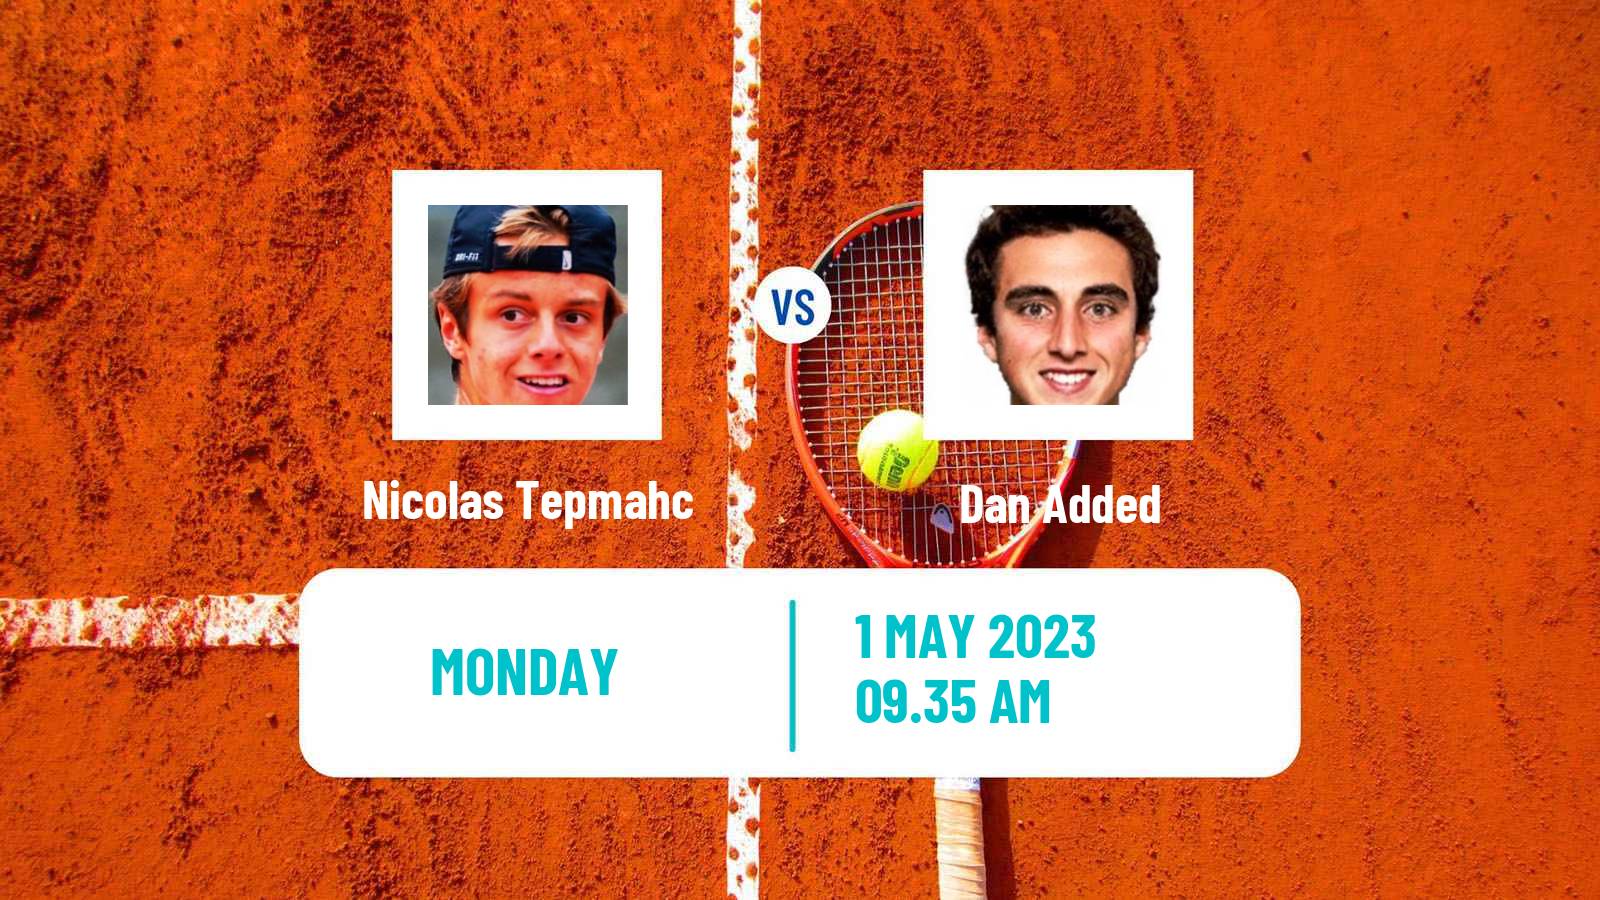 Tennis ATP Challenger Nicolas Tepmahc - Dan Added